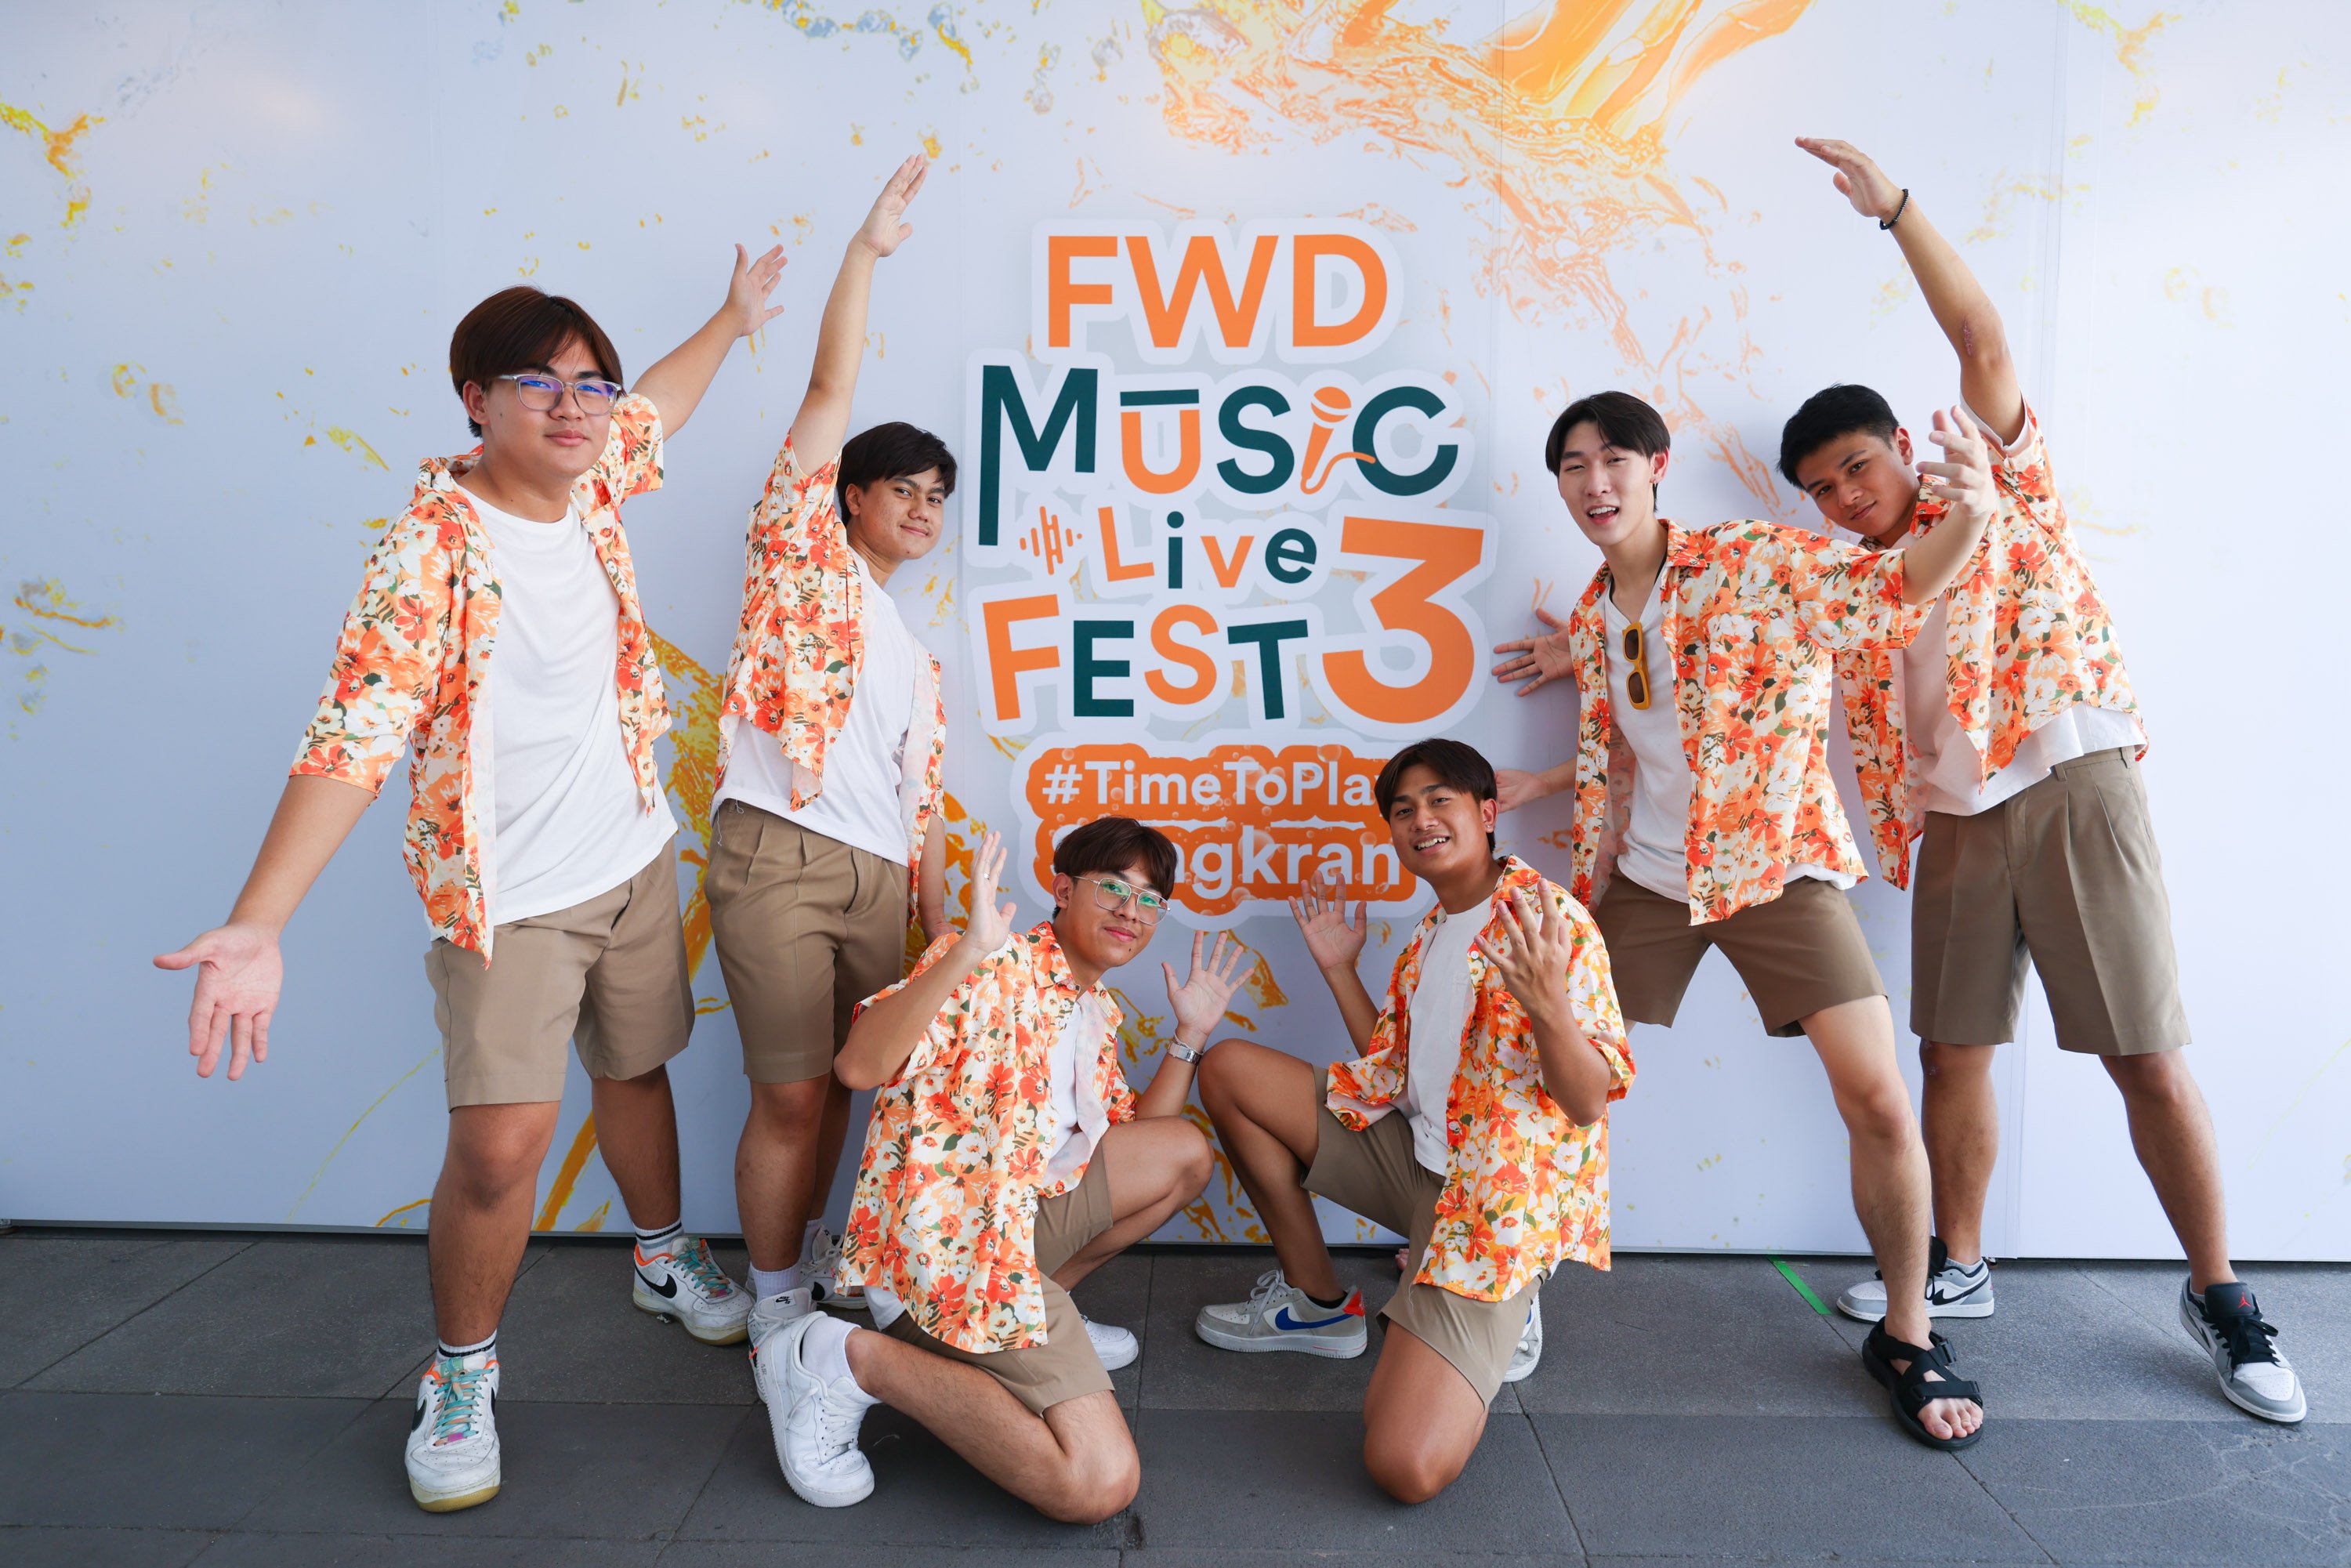 FWD Music Live Fest 3 #TimeToPlaySongkran